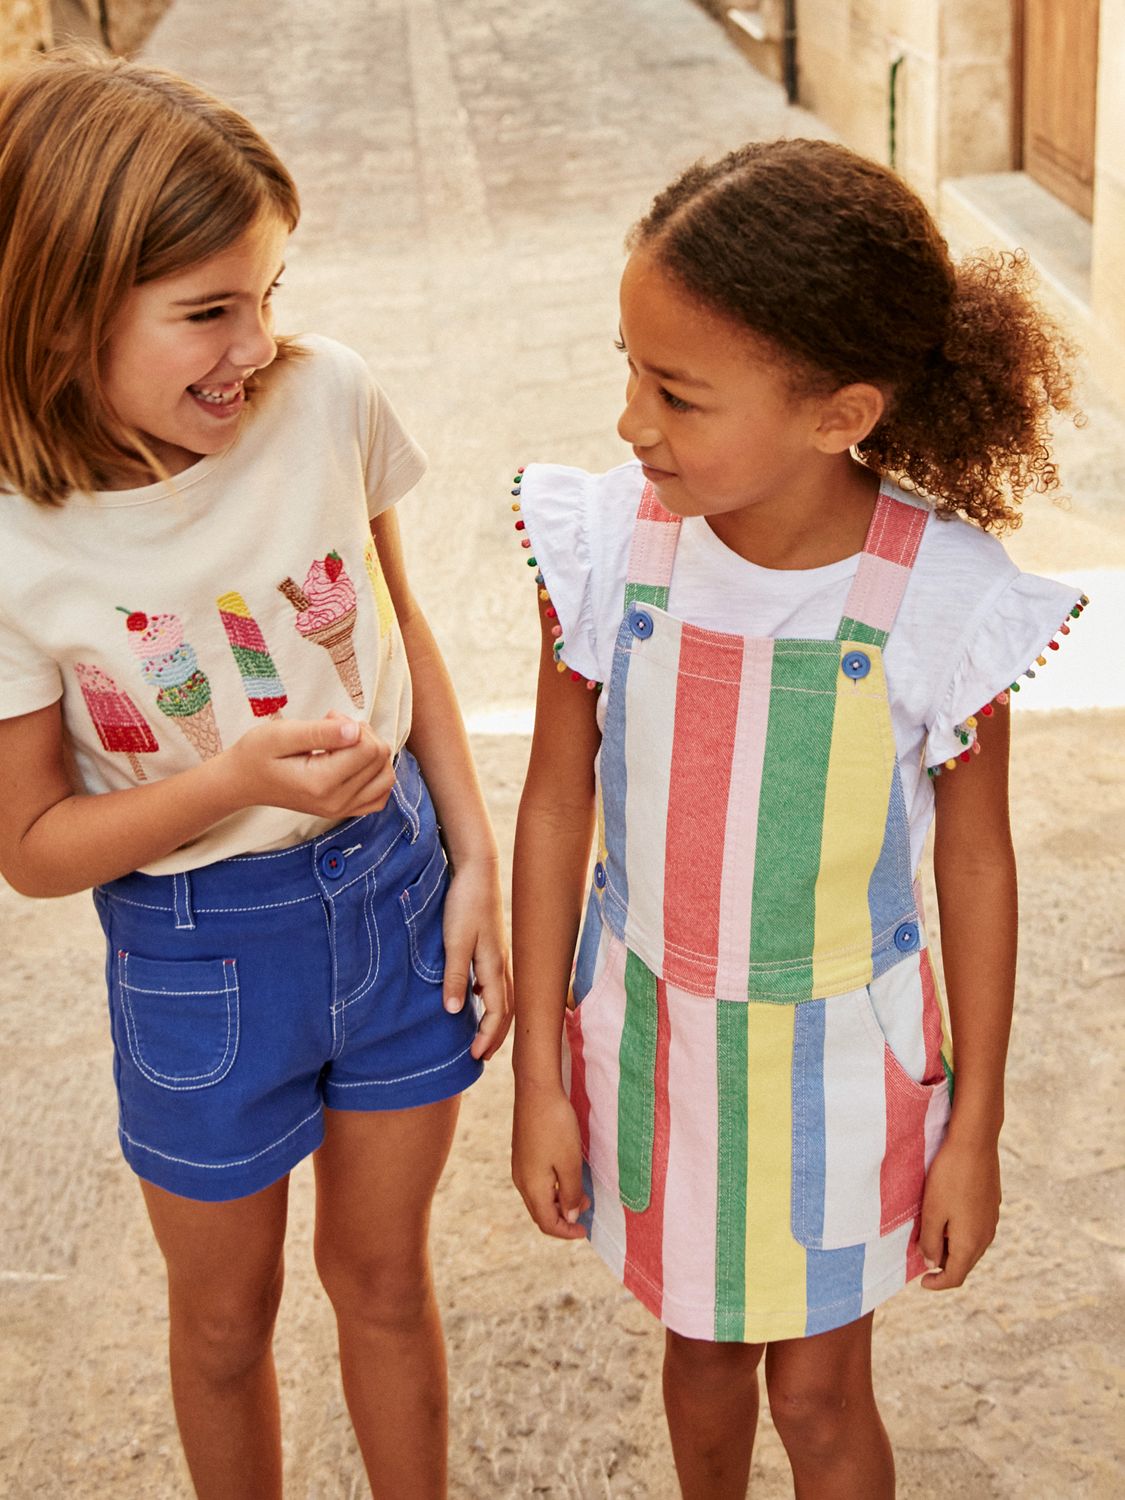 Mini Boden Kids' Rainbow Stripe Dungaree Dress, Multi, 3-4Y